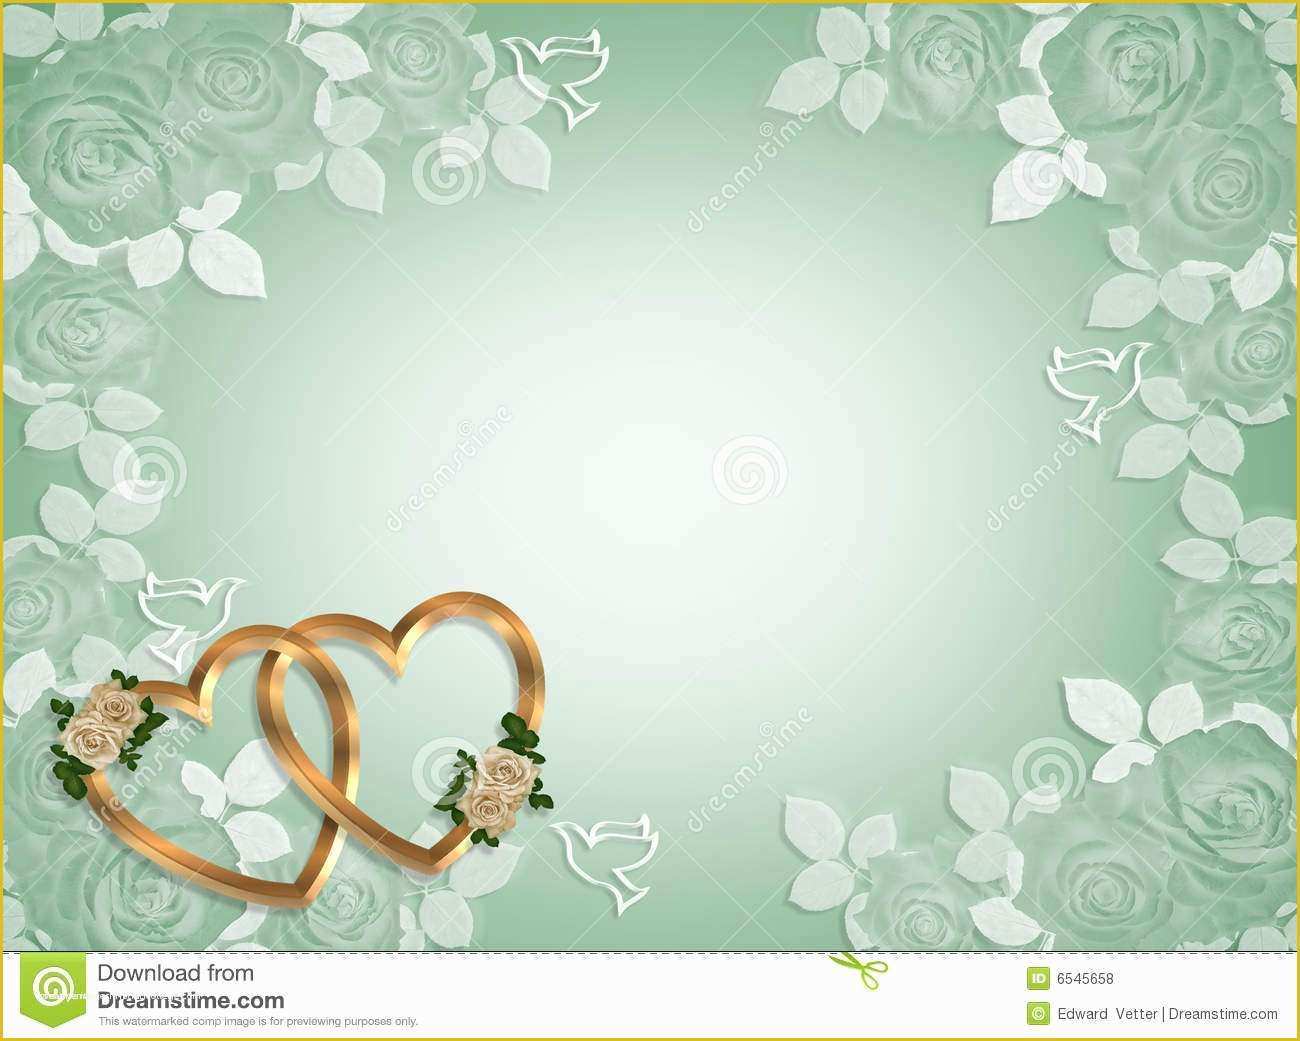 Free Wedding Templates Online Of Wedding Invitation Background Designs Free Luxury